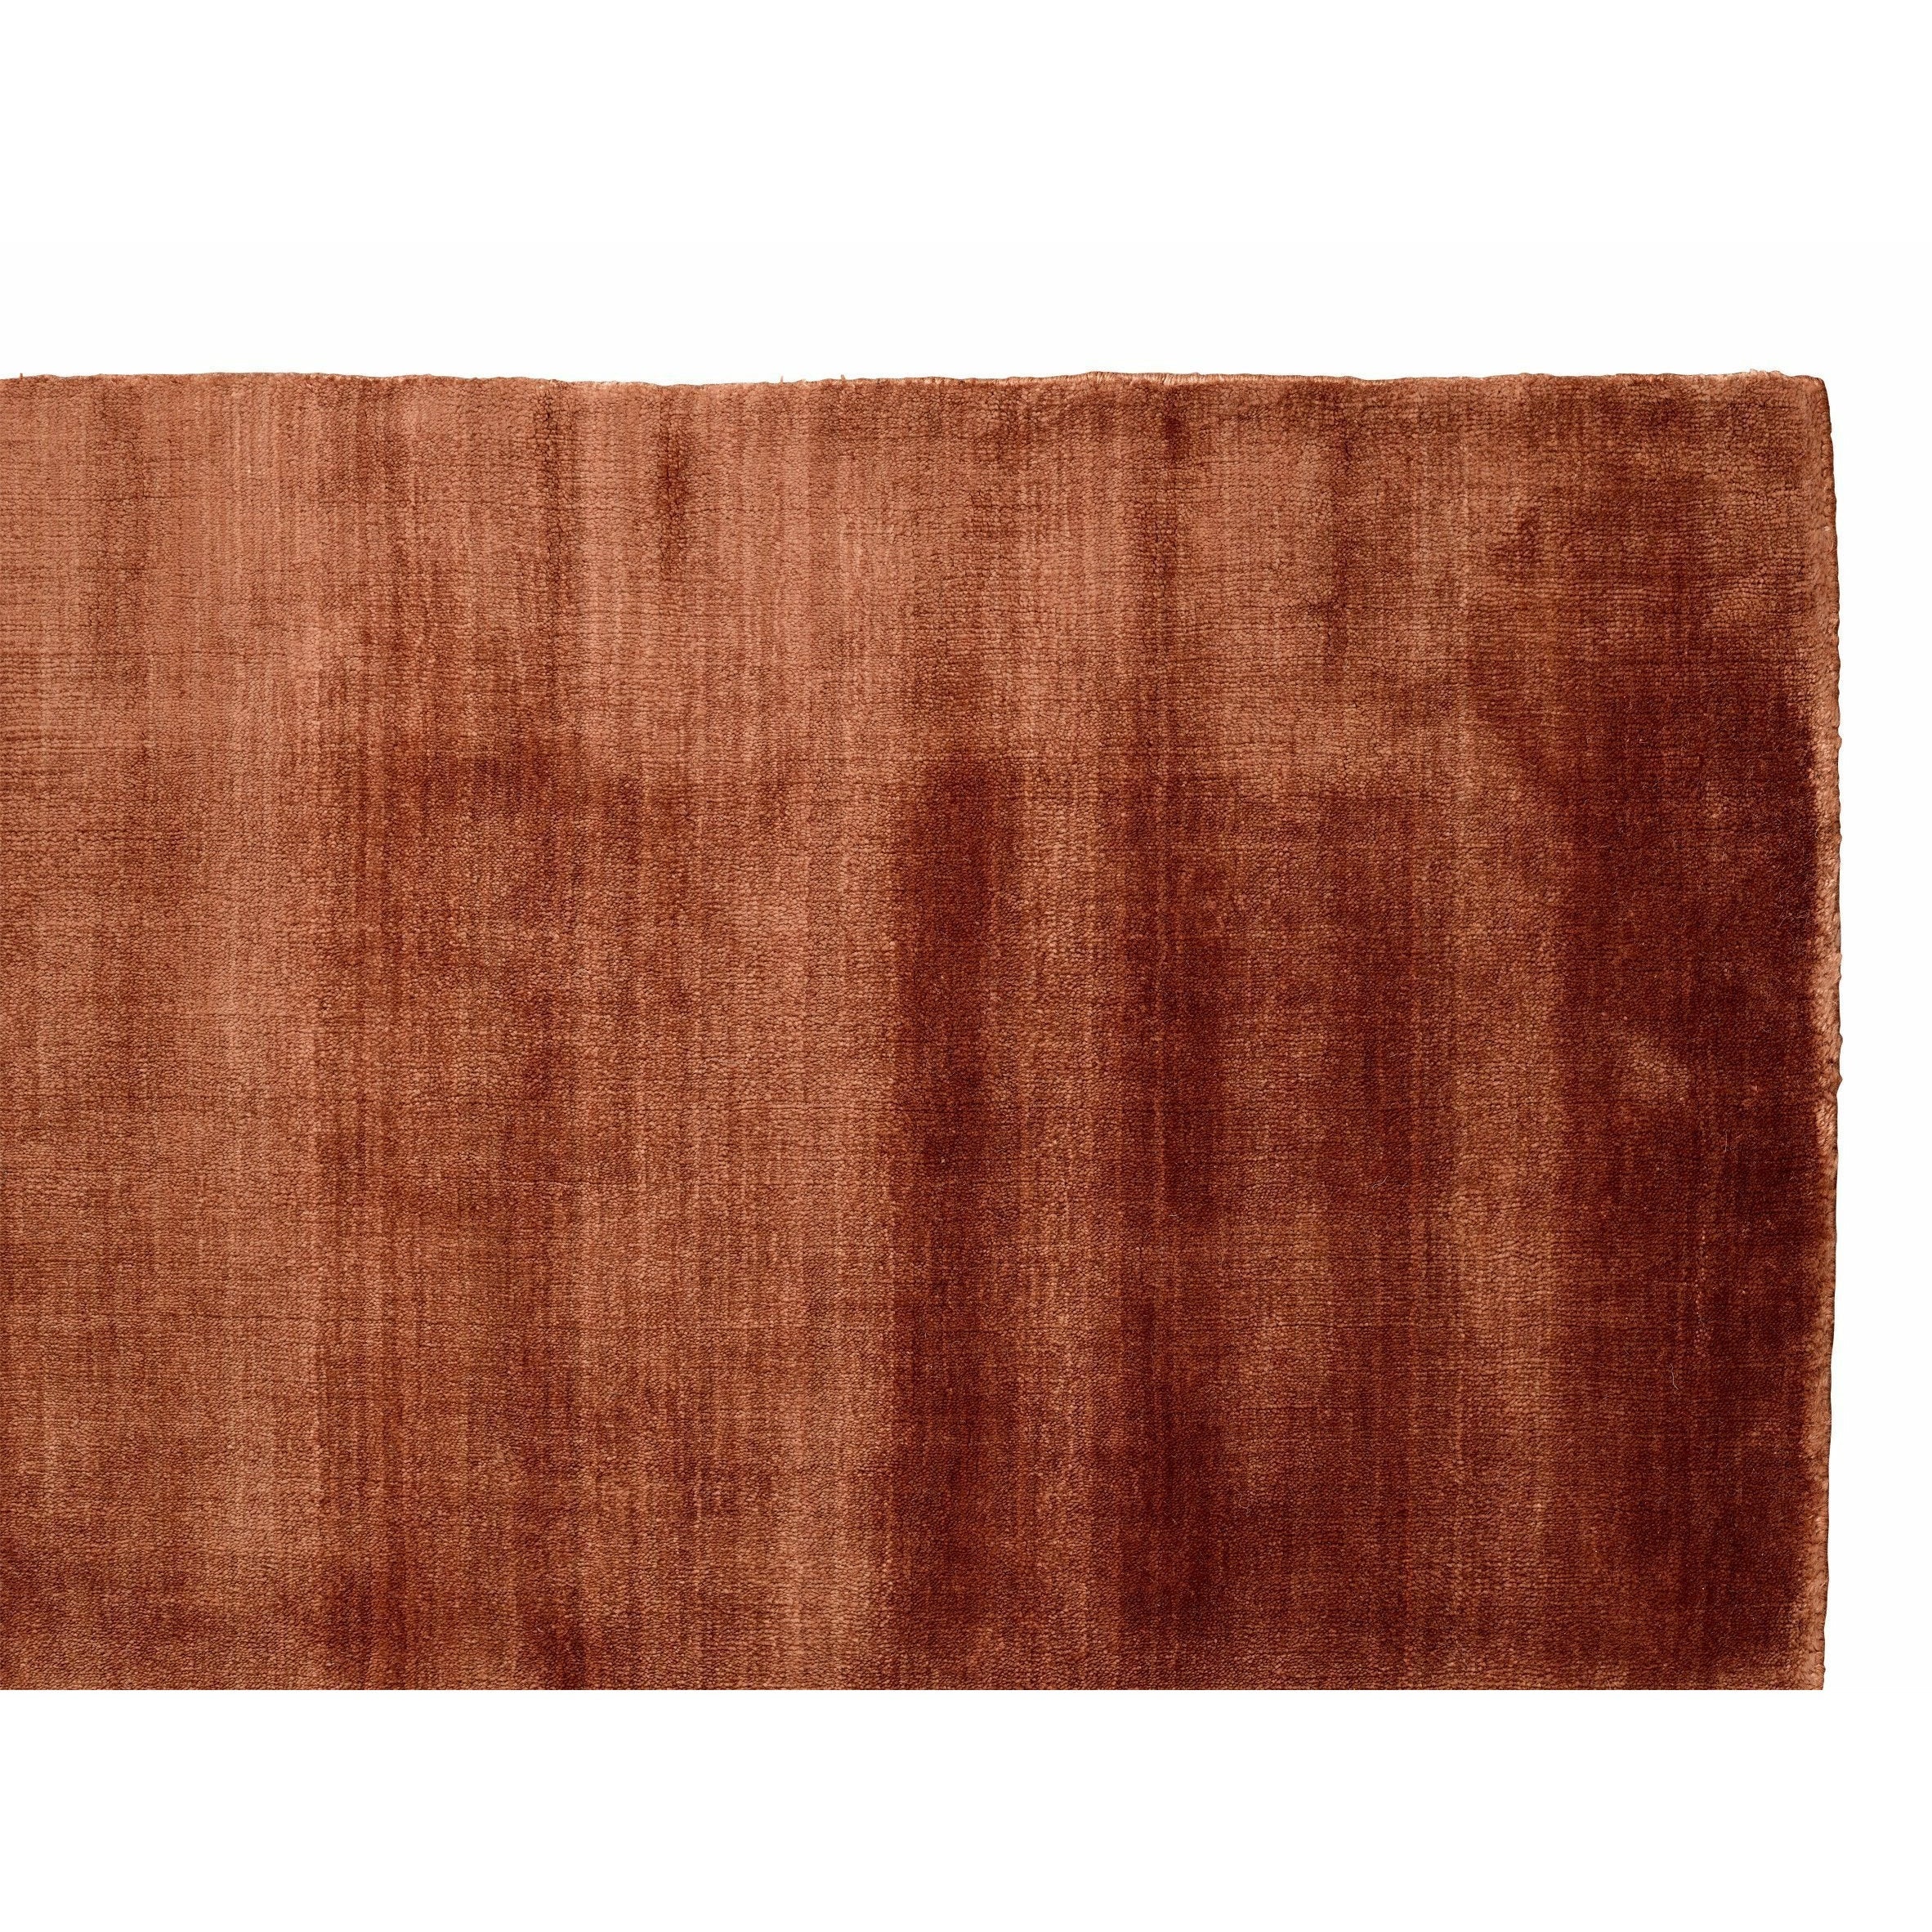 Massimo竹地毯铜，170x240厘米